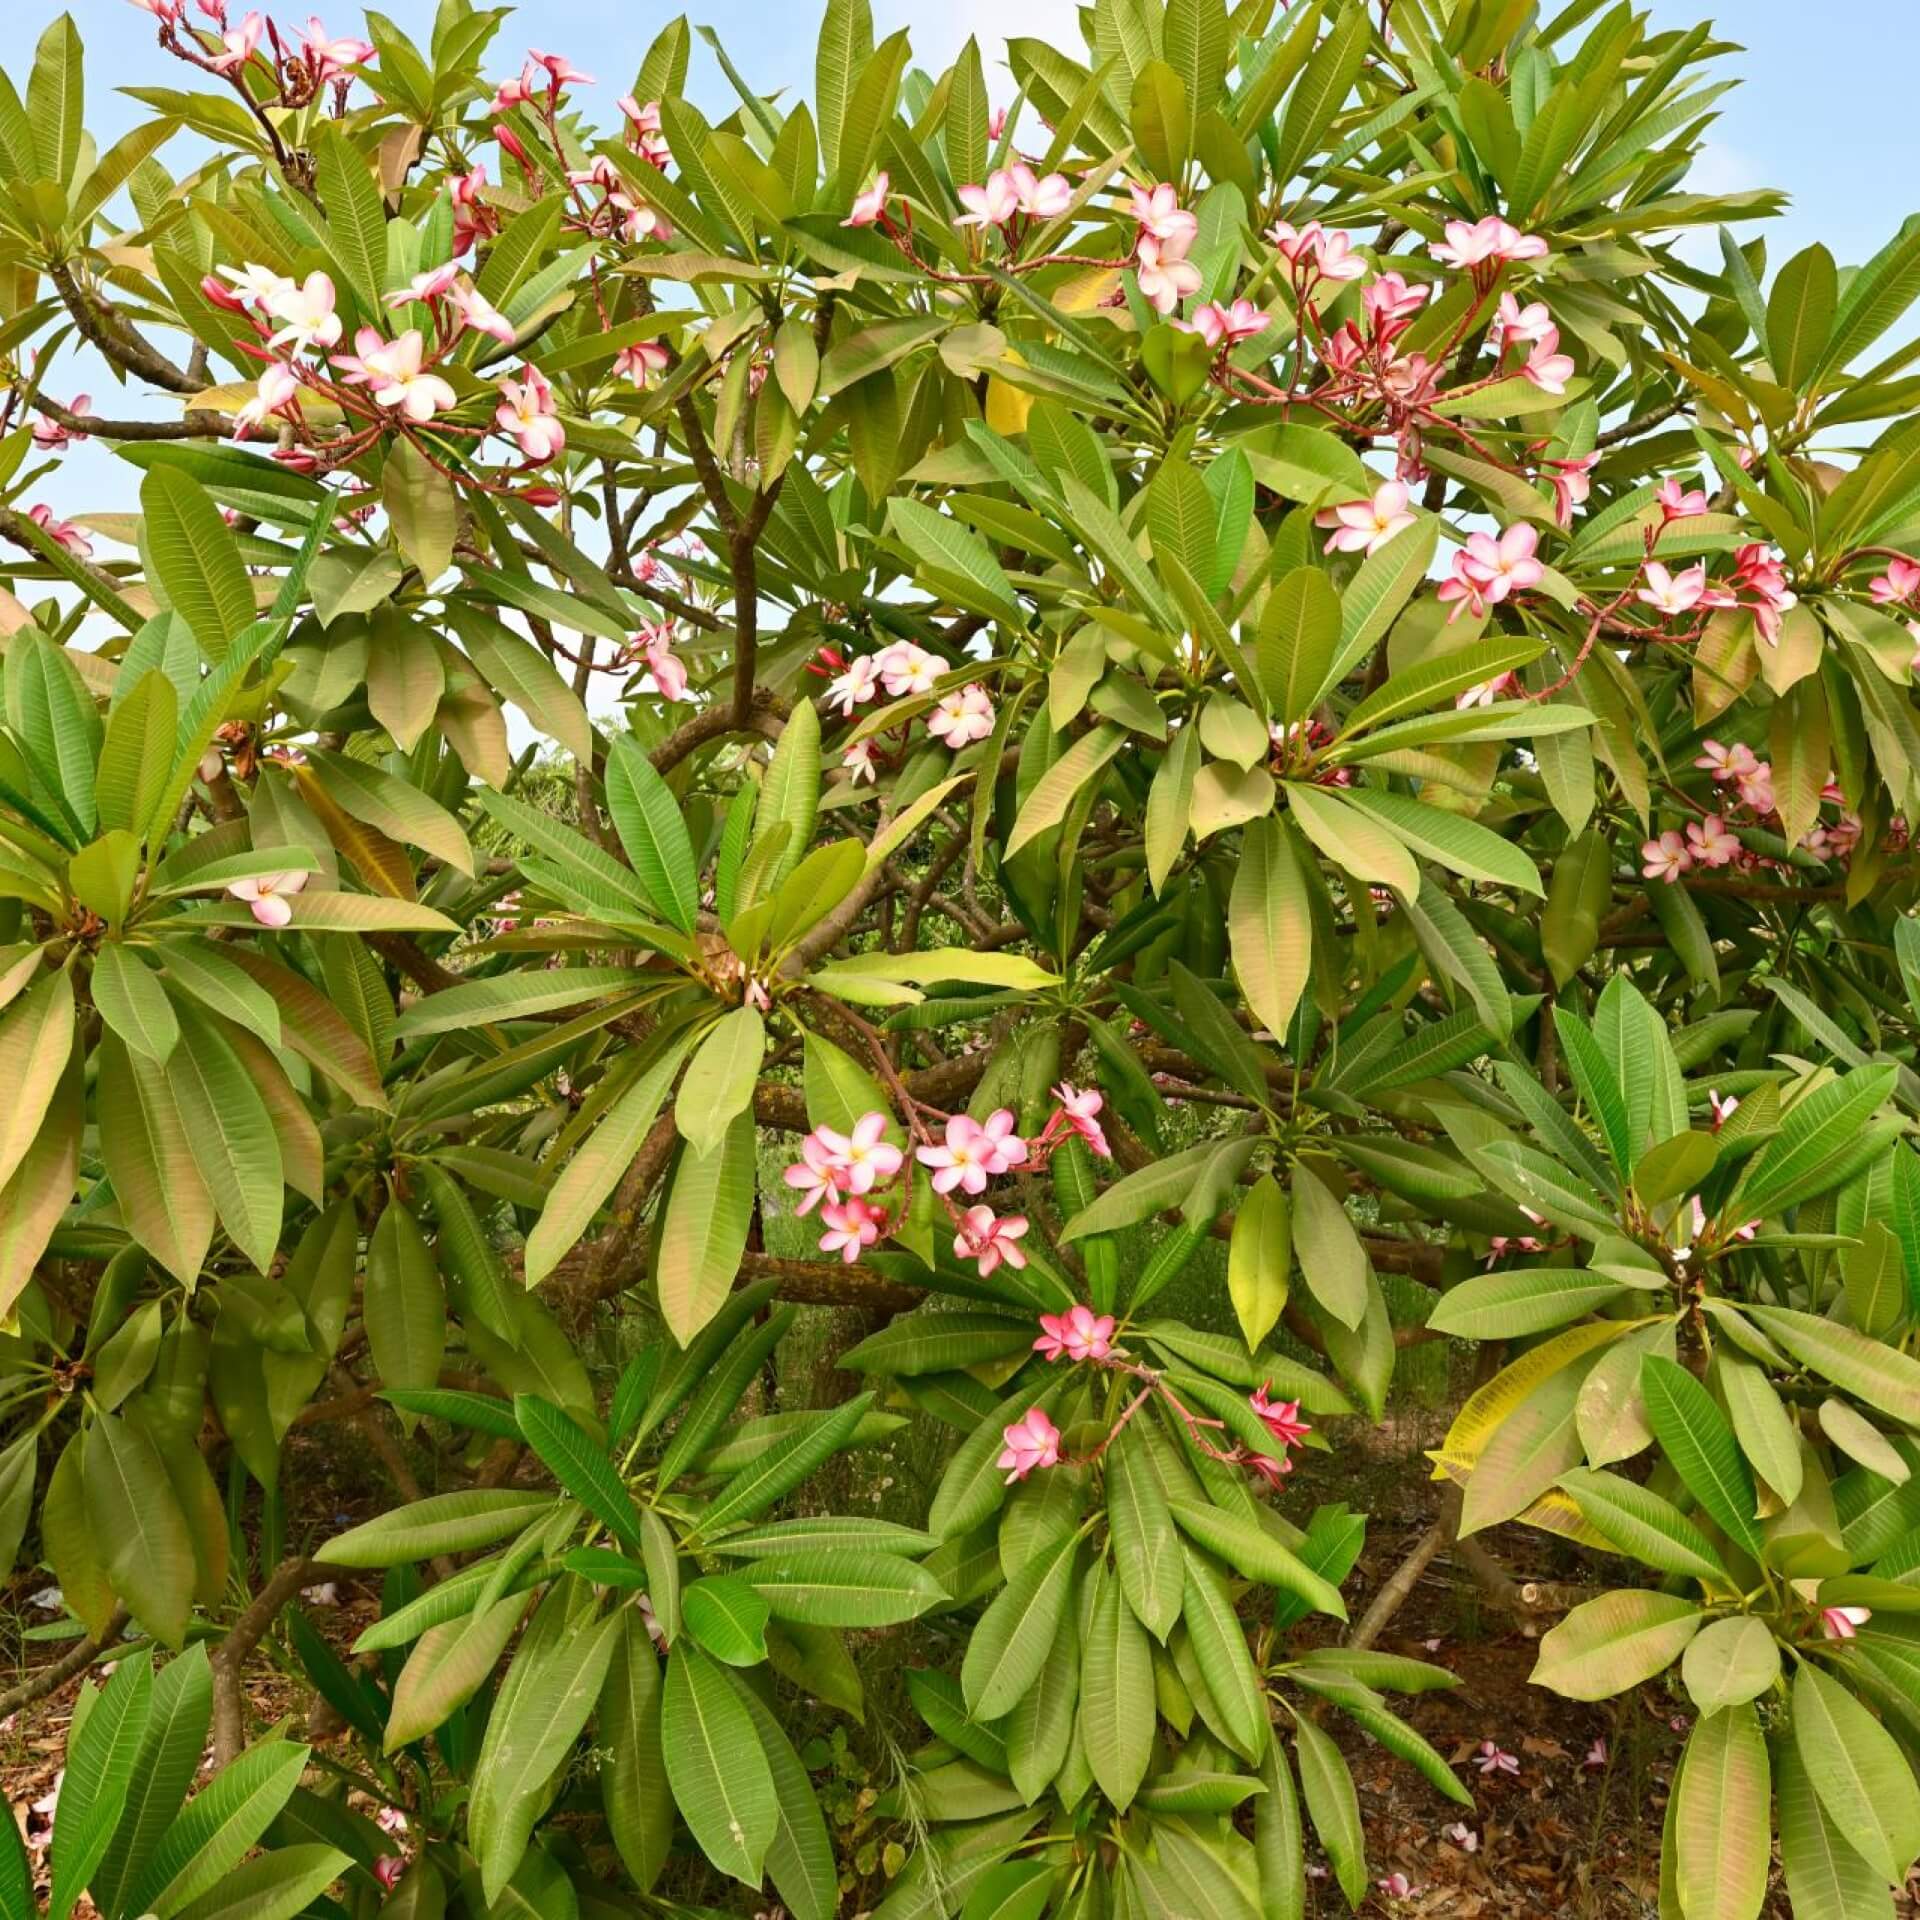 Rote Frangipani (Plumeria rubra)